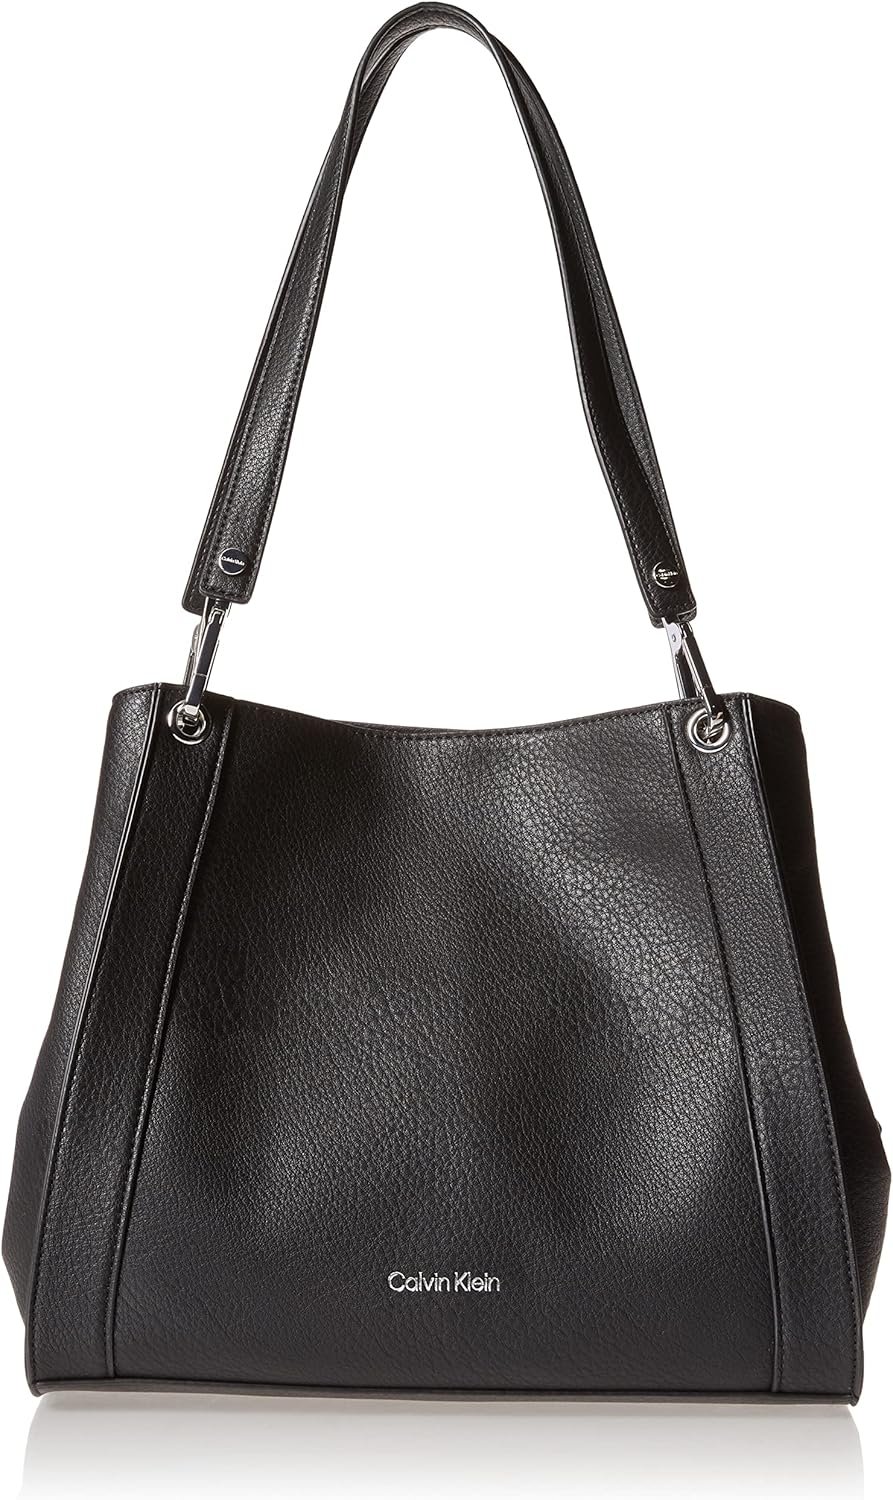 Calvin Klein Shoulder Bag Review